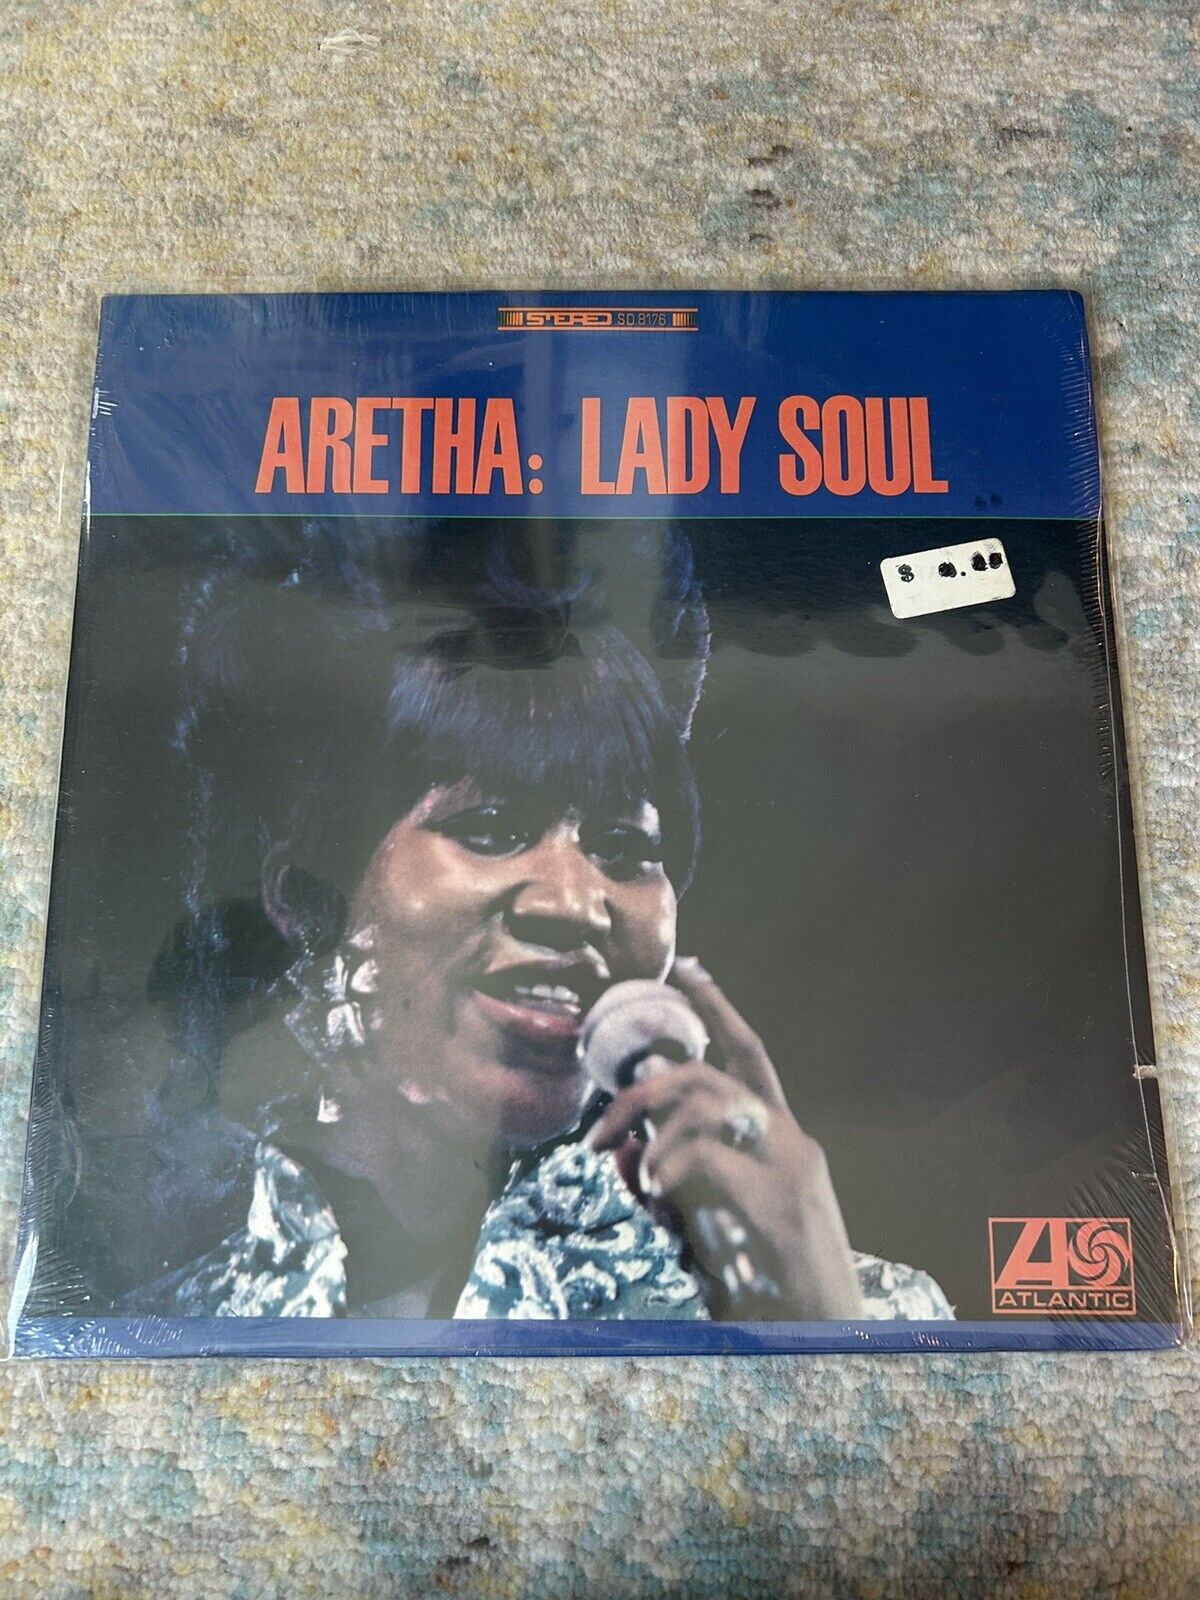 Sealed Aretha Franklin Lady Soul SD-8176 Original 1st Pressing 1968 Vinyl LP